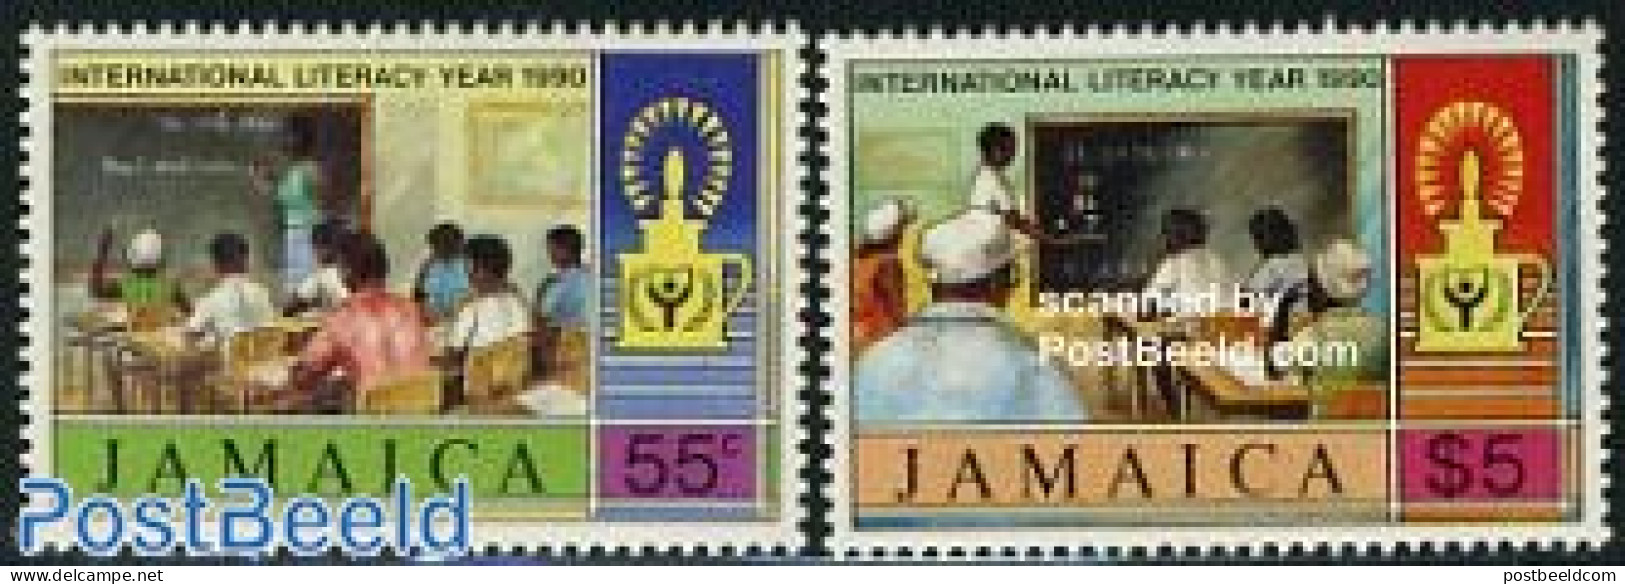 Jamaica 1990 Education 2v, Mint NH - Jamaica (1962-...)